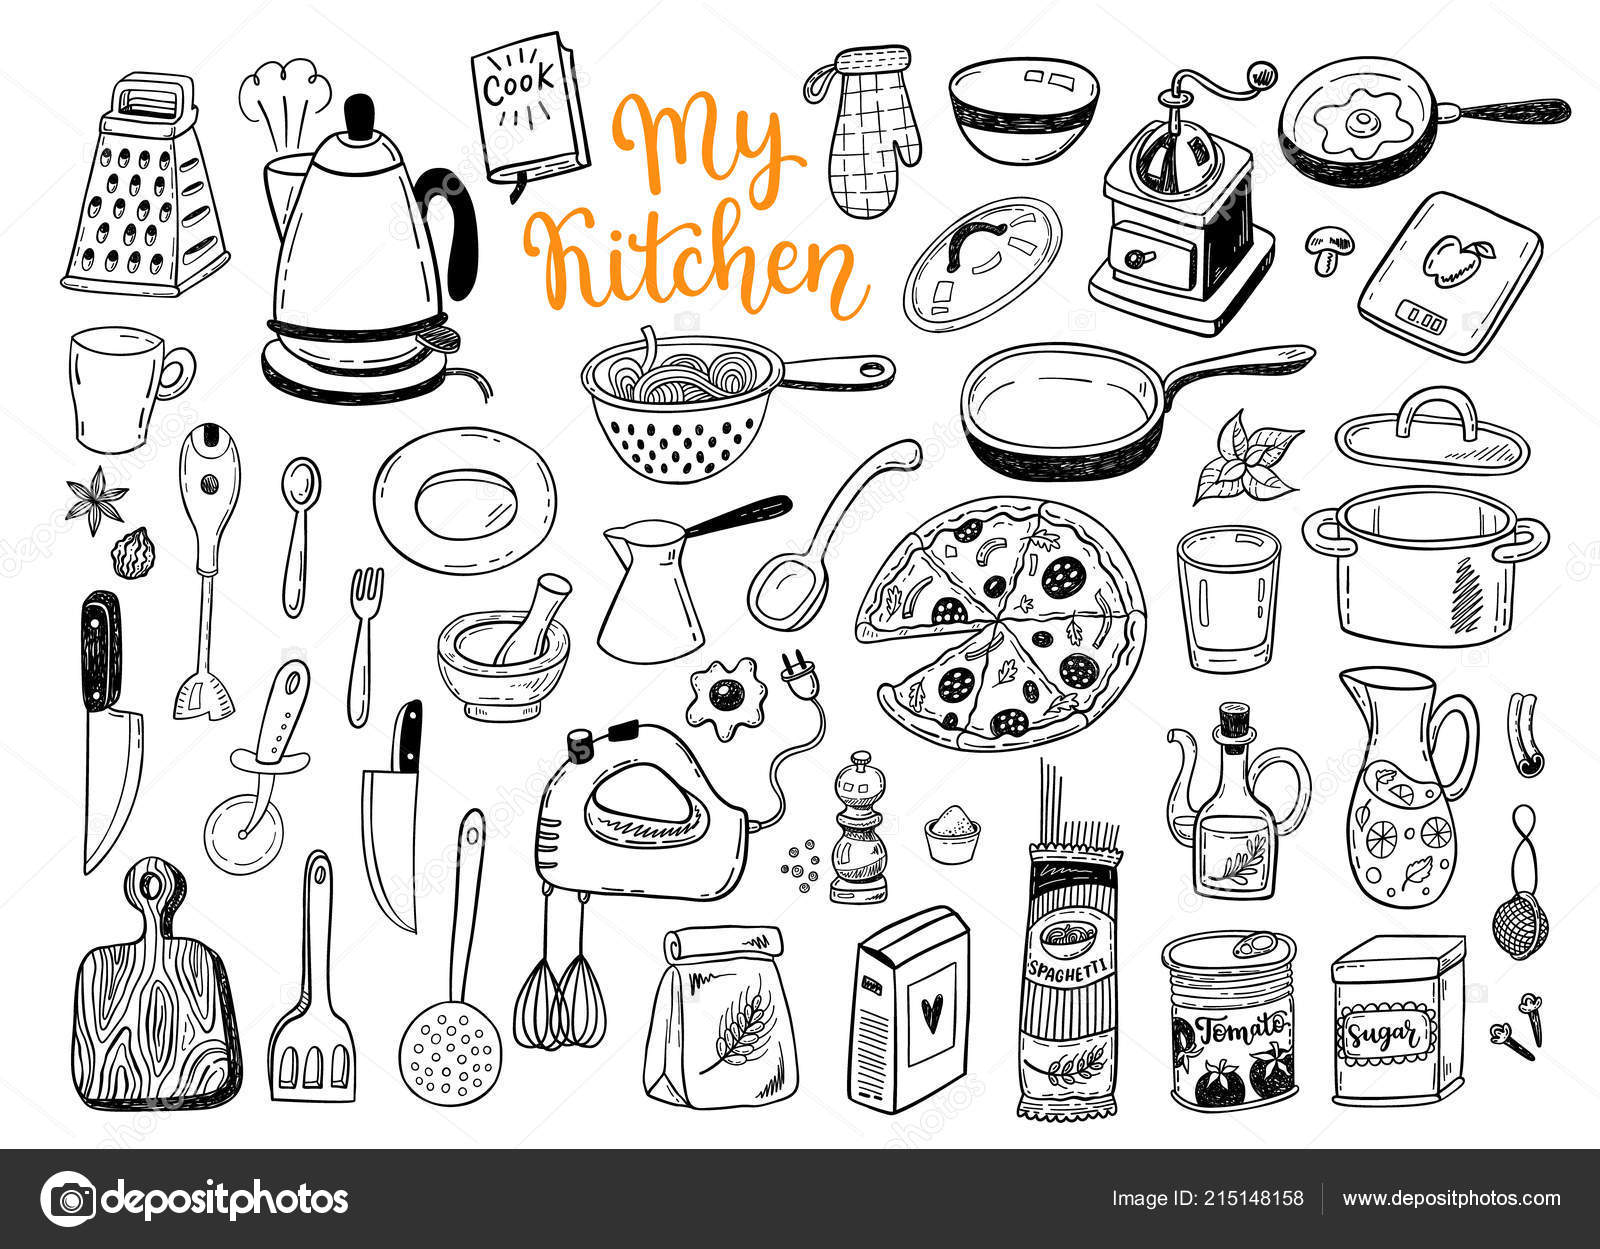 https://st4.depositphotos.com/4966263/21514/v/1600/depositphotos_215148158-stock-illustration-kitchen-utensils-cooking-stuff-hand.jpg